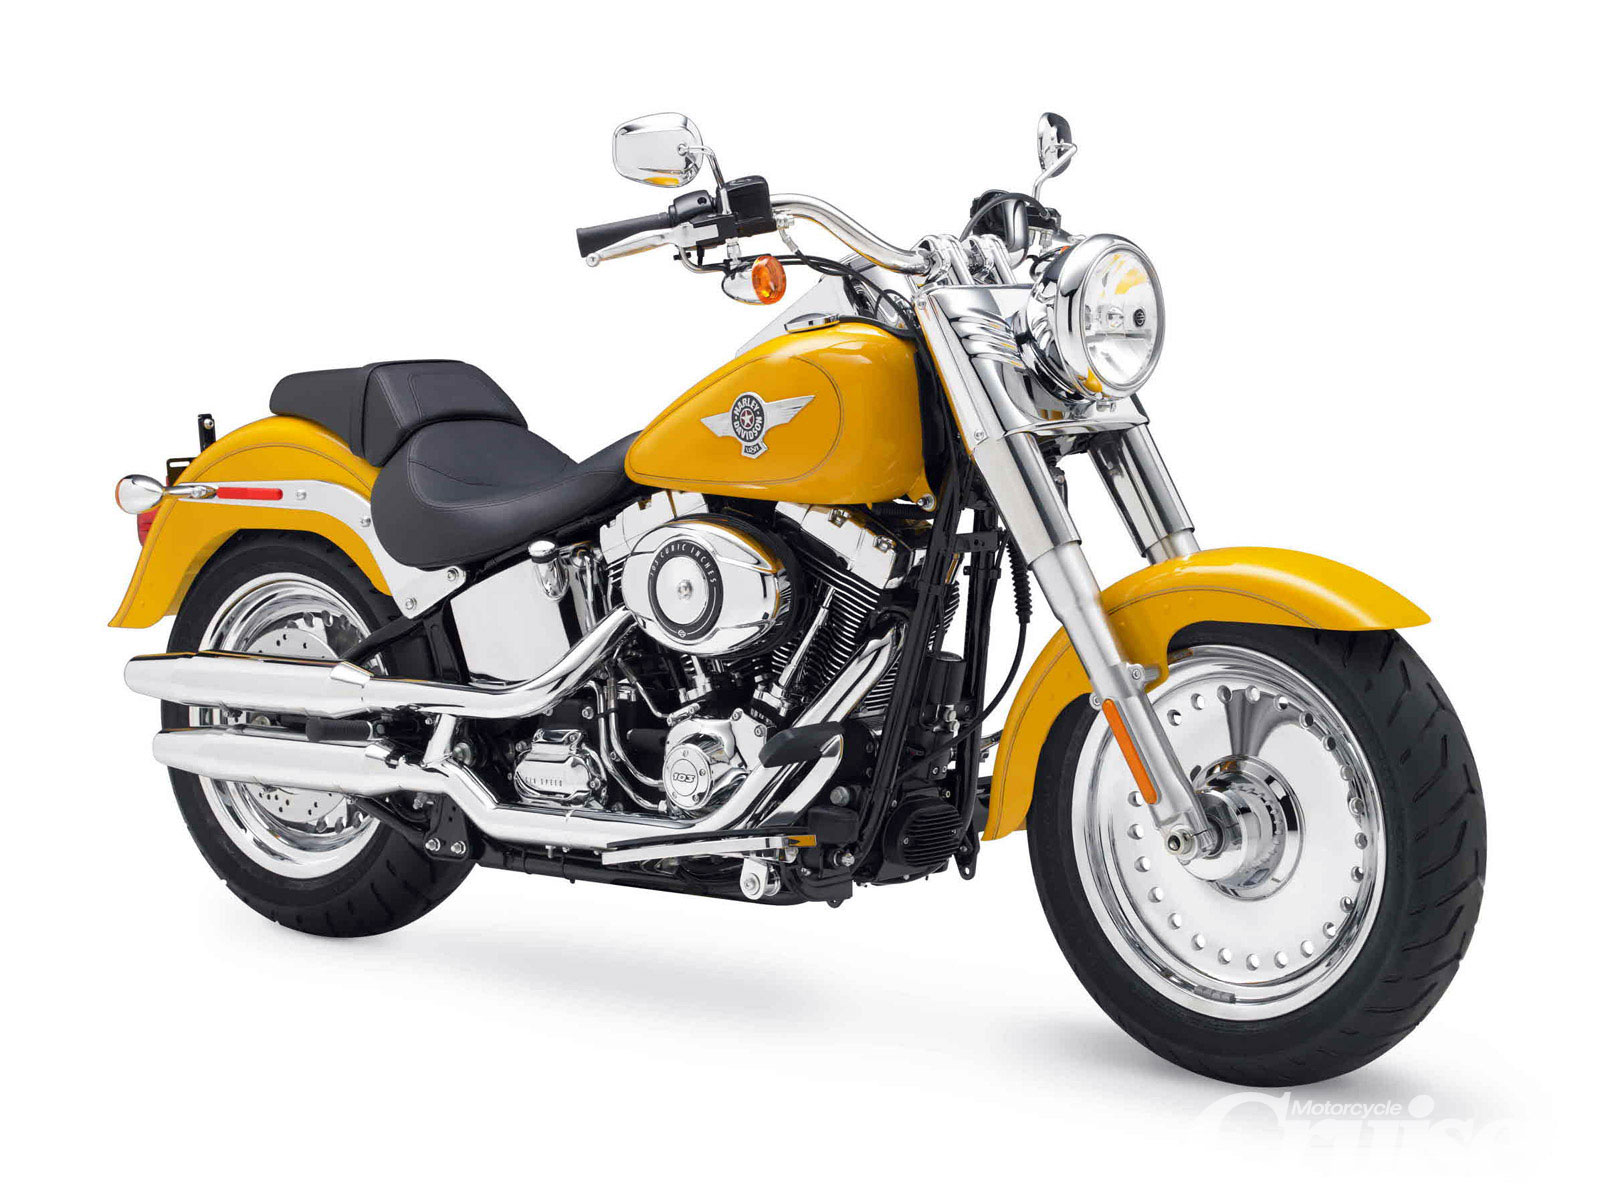 Harley Davidson Motorcycle: Harley Davidson Models